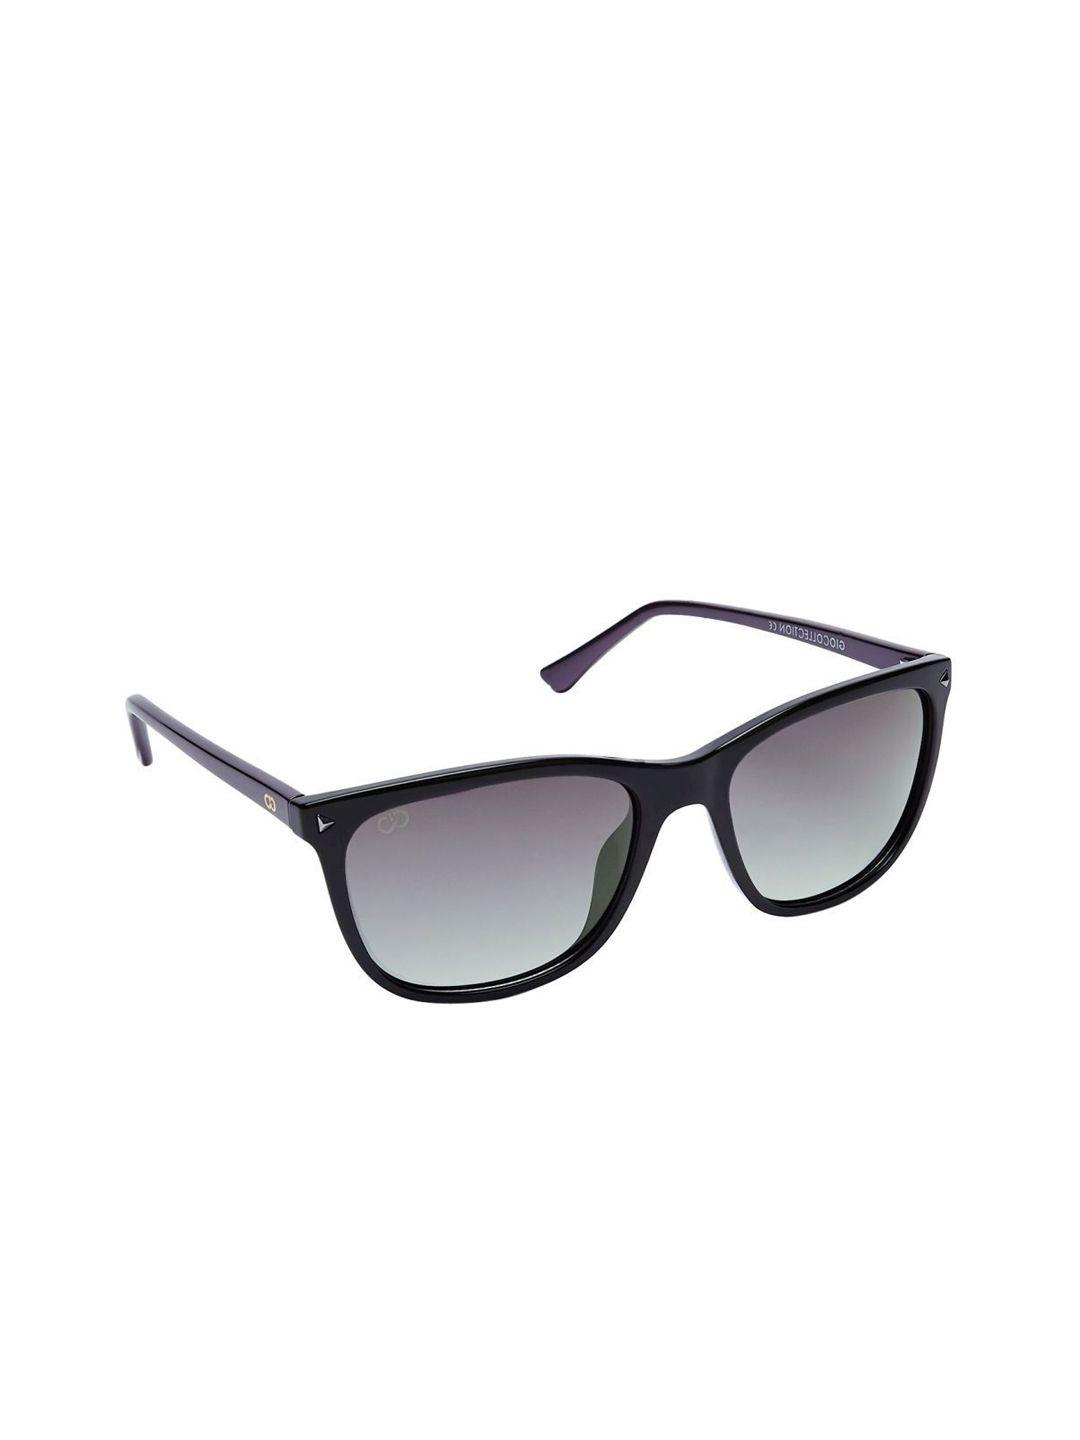 gio collection unisex wayfarer sunglasses gm3048c03